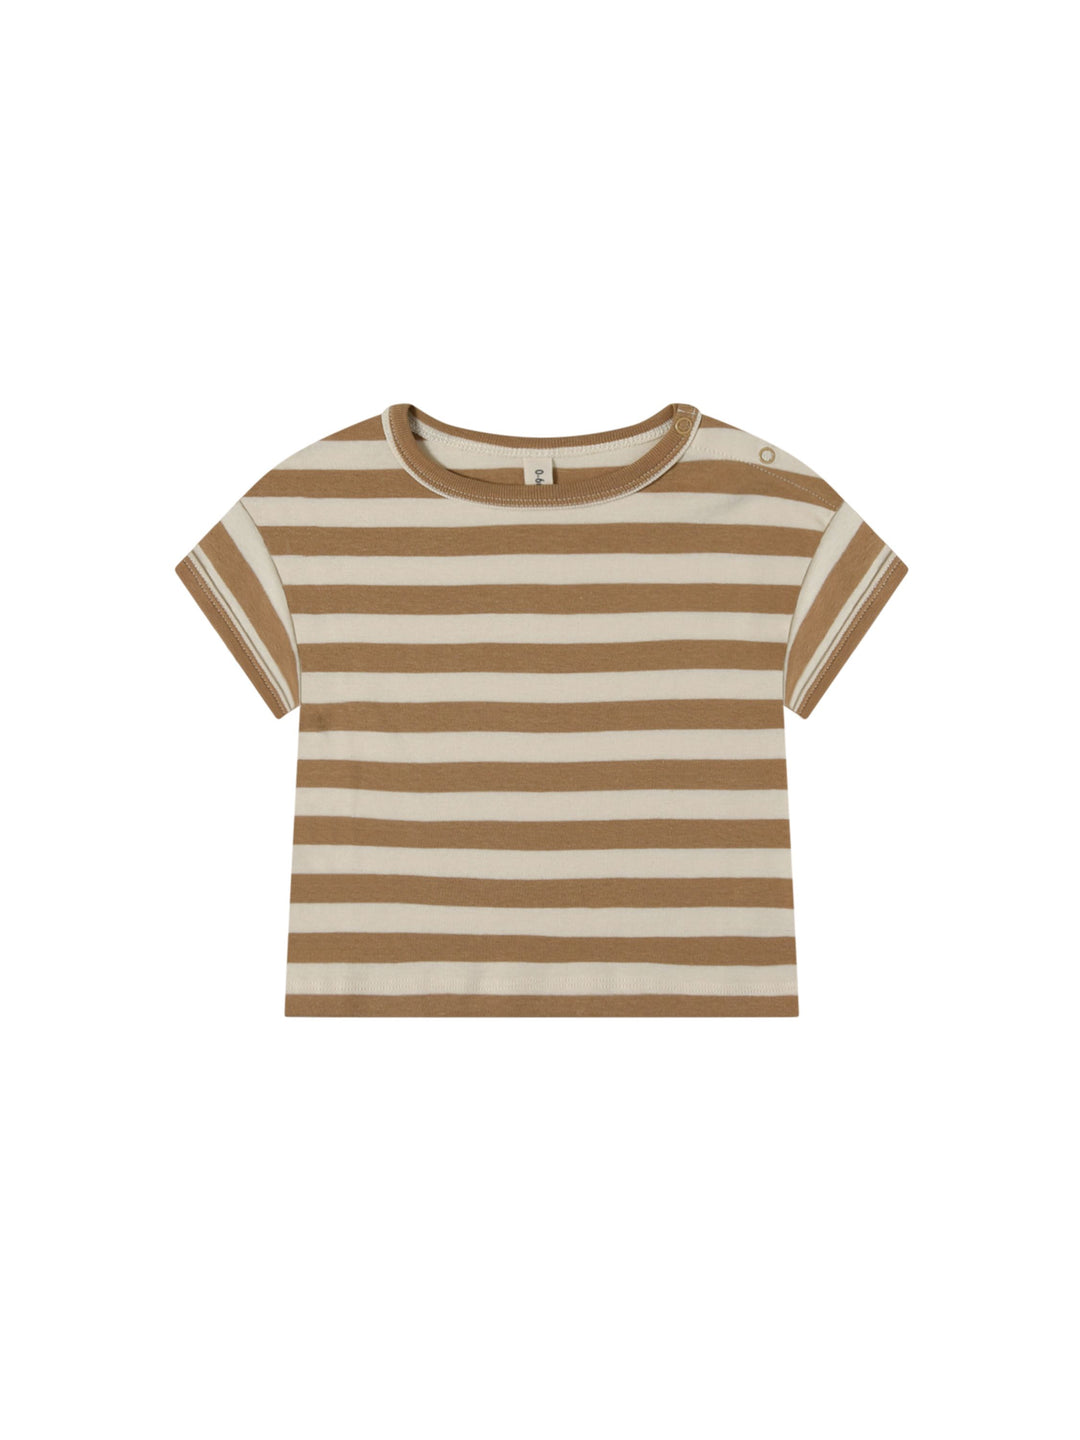 Boxy T-Shirt, Gold Sailor